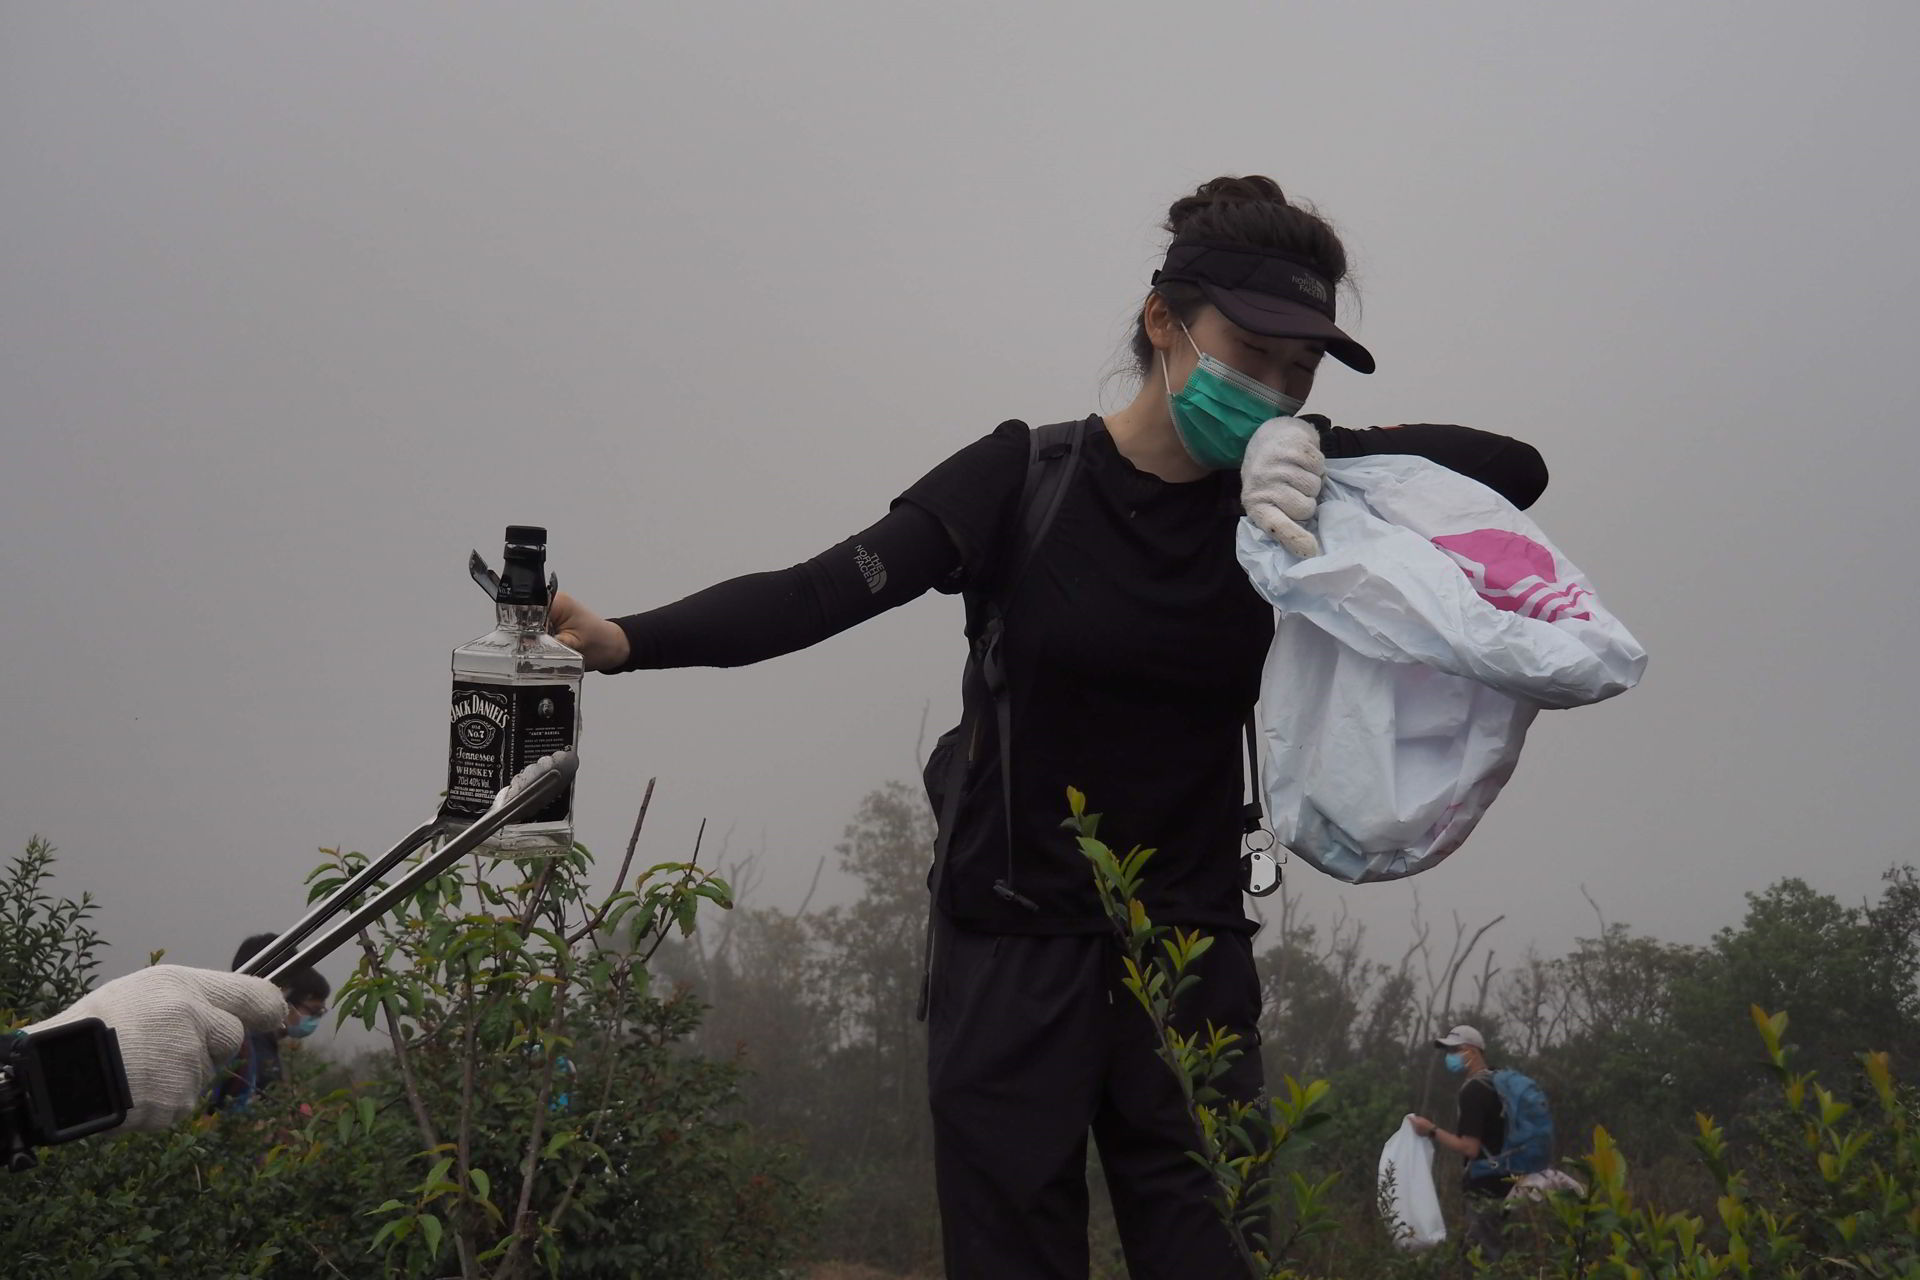 Melody去年參加綠色和平「行山抗疫不留痕」活動，見證山上垃圾種類繁多，包括手上的酒樽。 香港山女授權使用照片